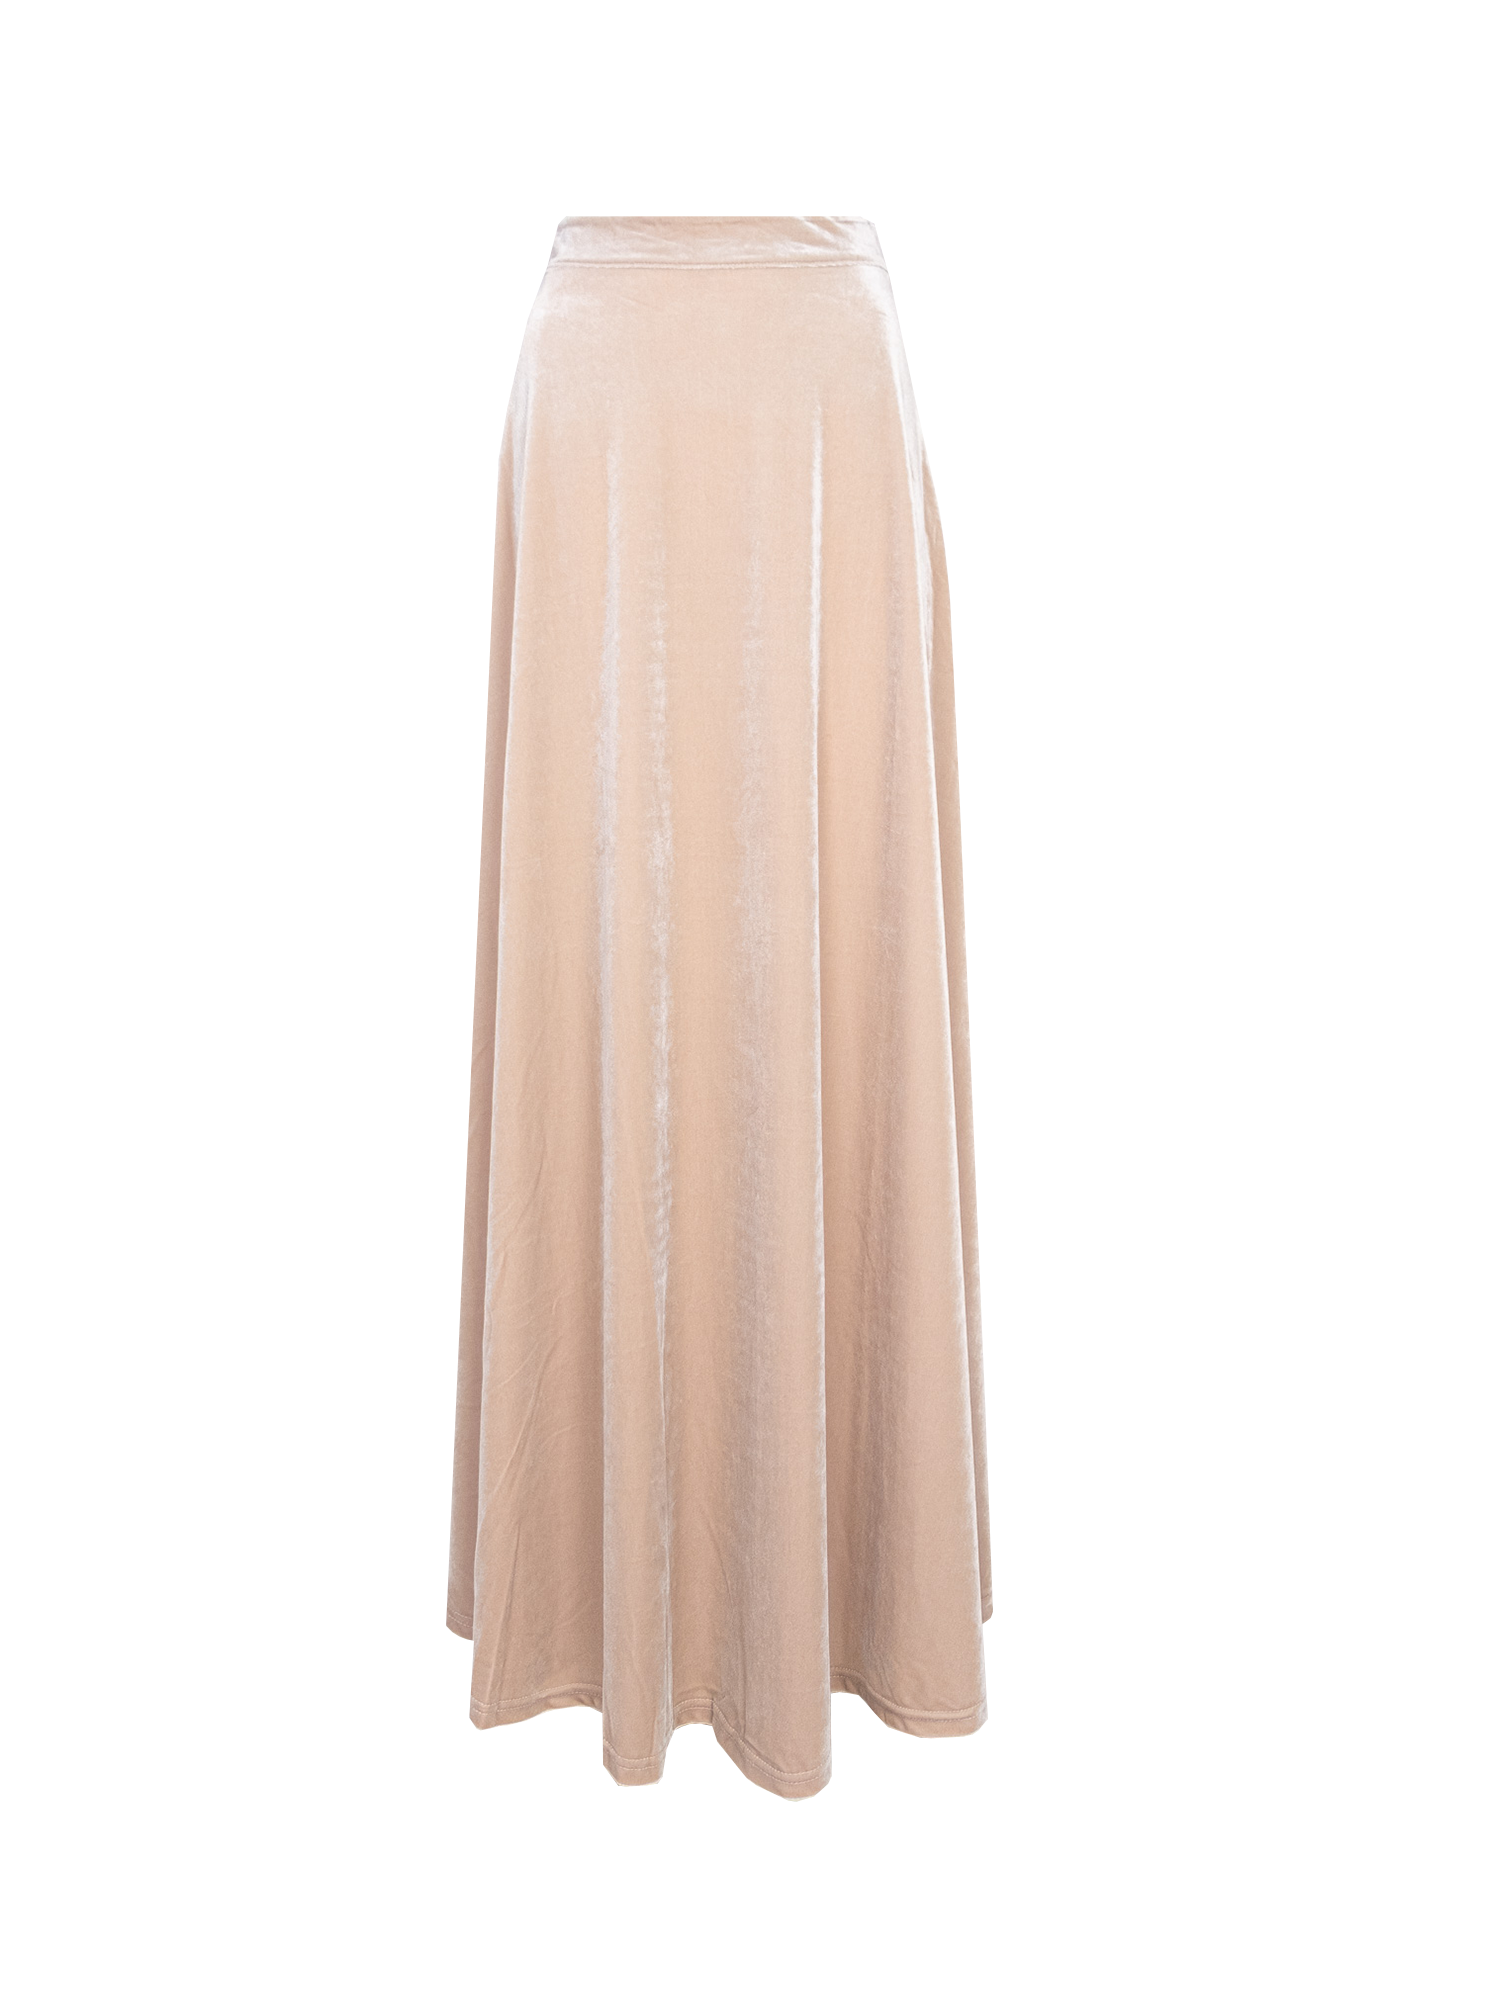 TOSCA - long chenille beige maxi skirt